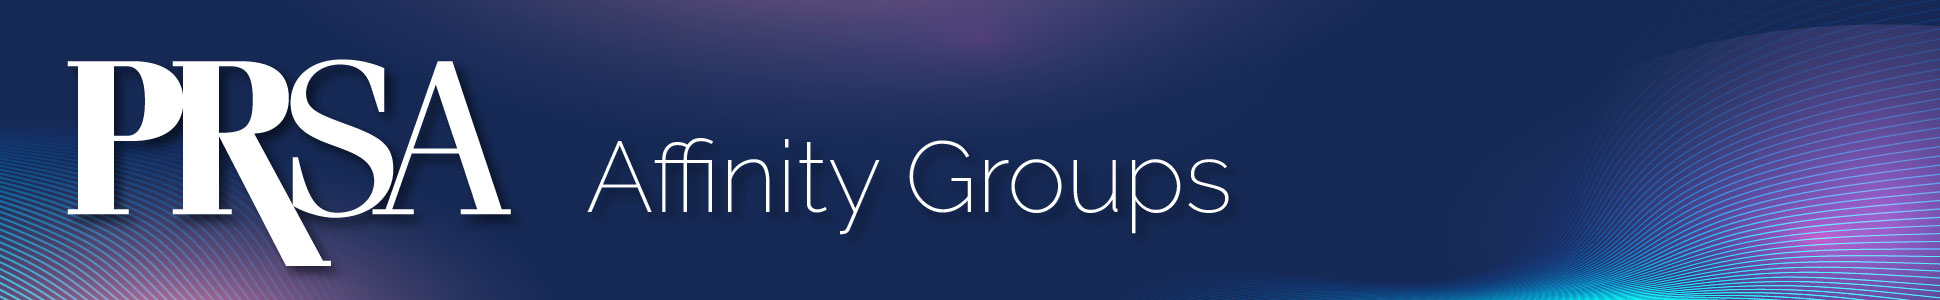 PRSA Affinity Groups